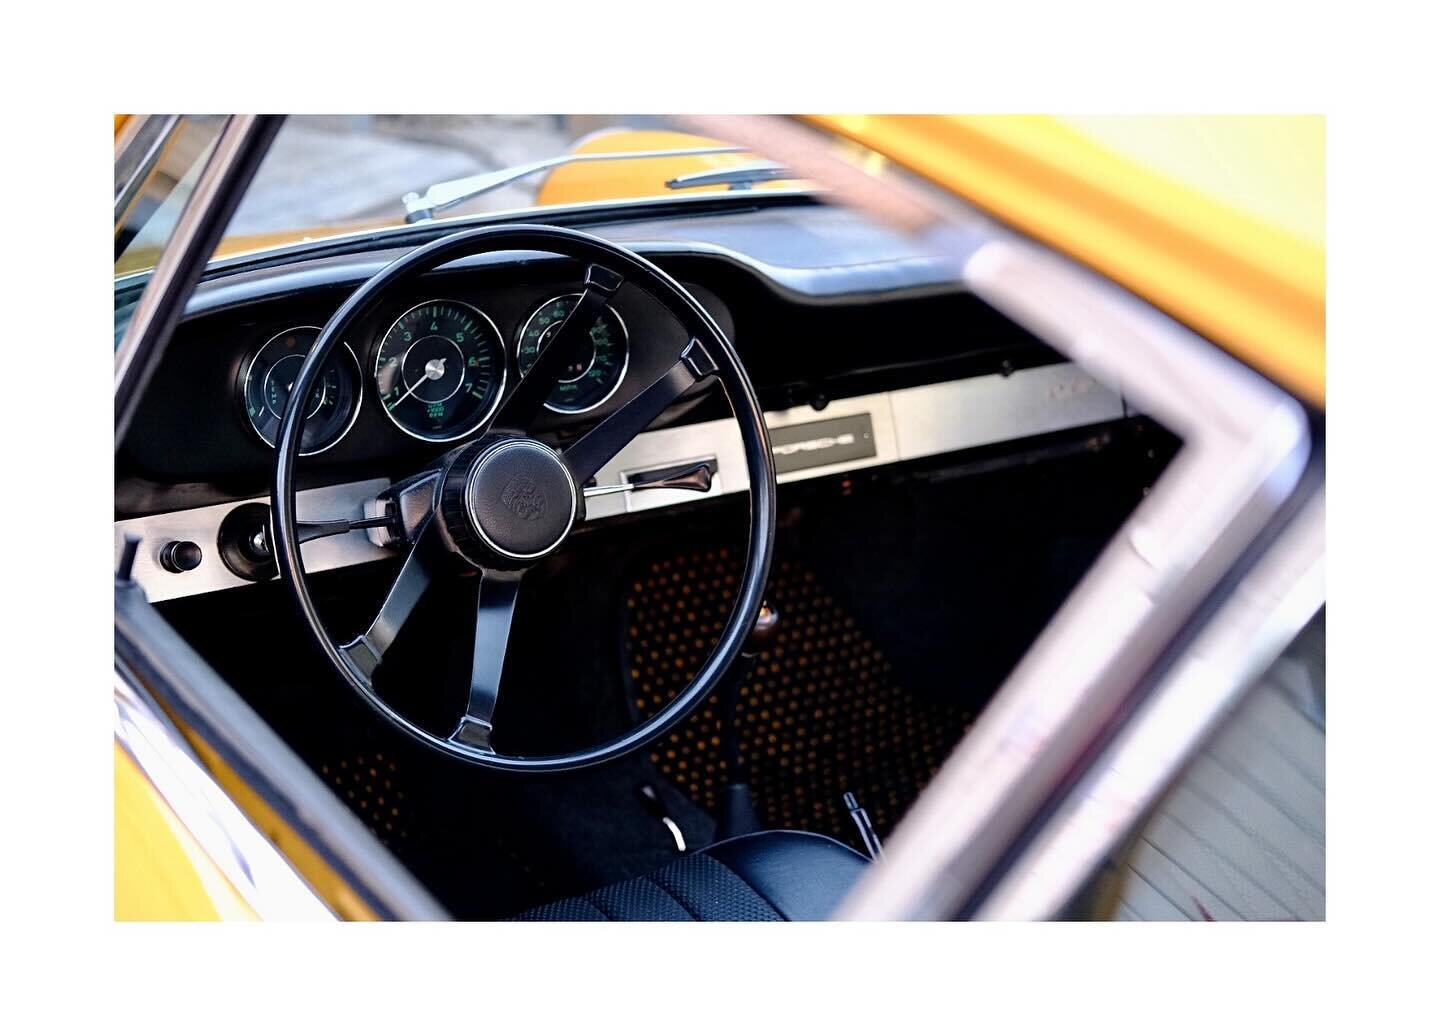 Seat time in a Porsche is unforgettable 🏁

@porsche @porscheusa @000magazine @classicdriver @carvintage @type7 #porsche #porscheusa #getoutanddrive #classicdriver #aircooledporsche #type7 #carvintage #classicporsche #savethemanuals #30a #carsof30a #